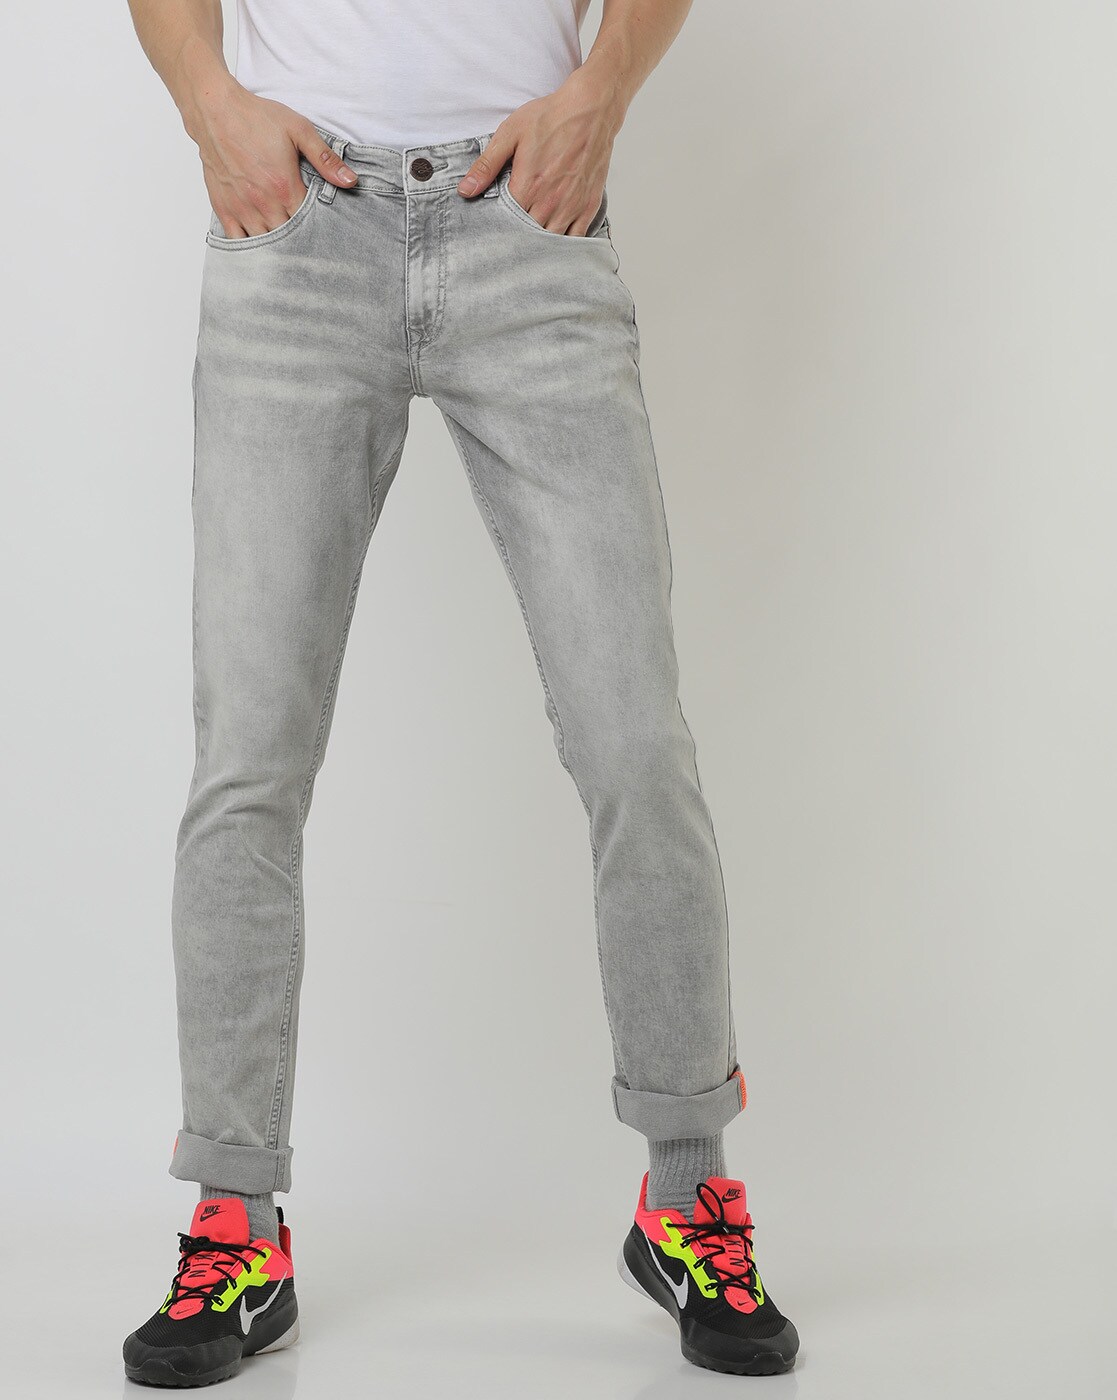 light grey skinny jeans